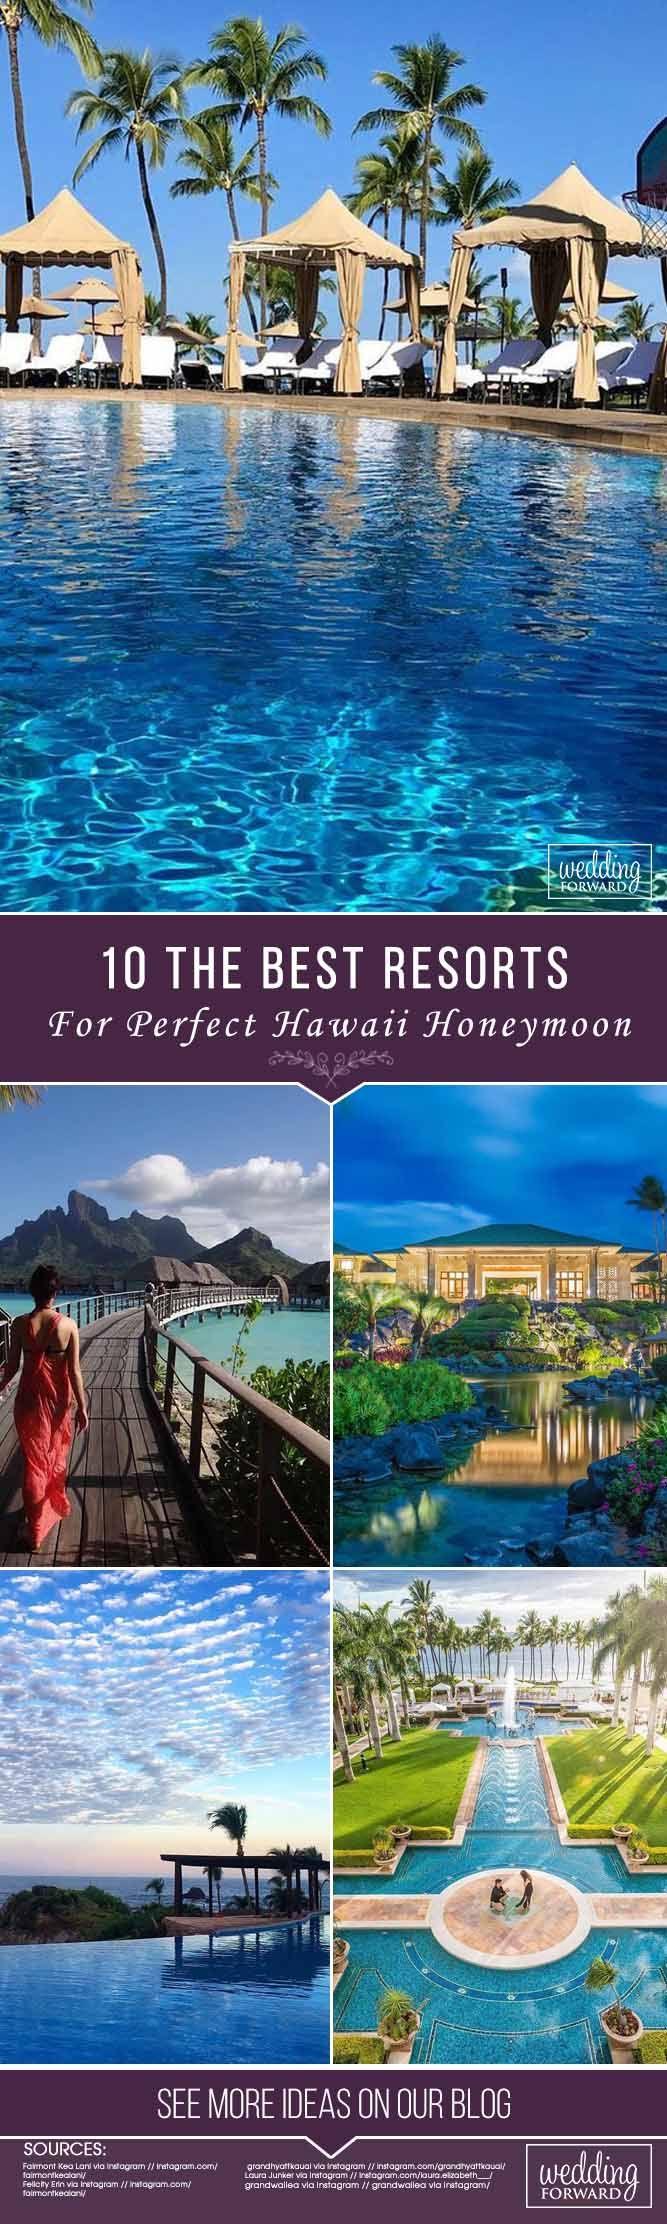 Wedding - 10 The Best Resorts For Perfect Hawaii Honeymoon